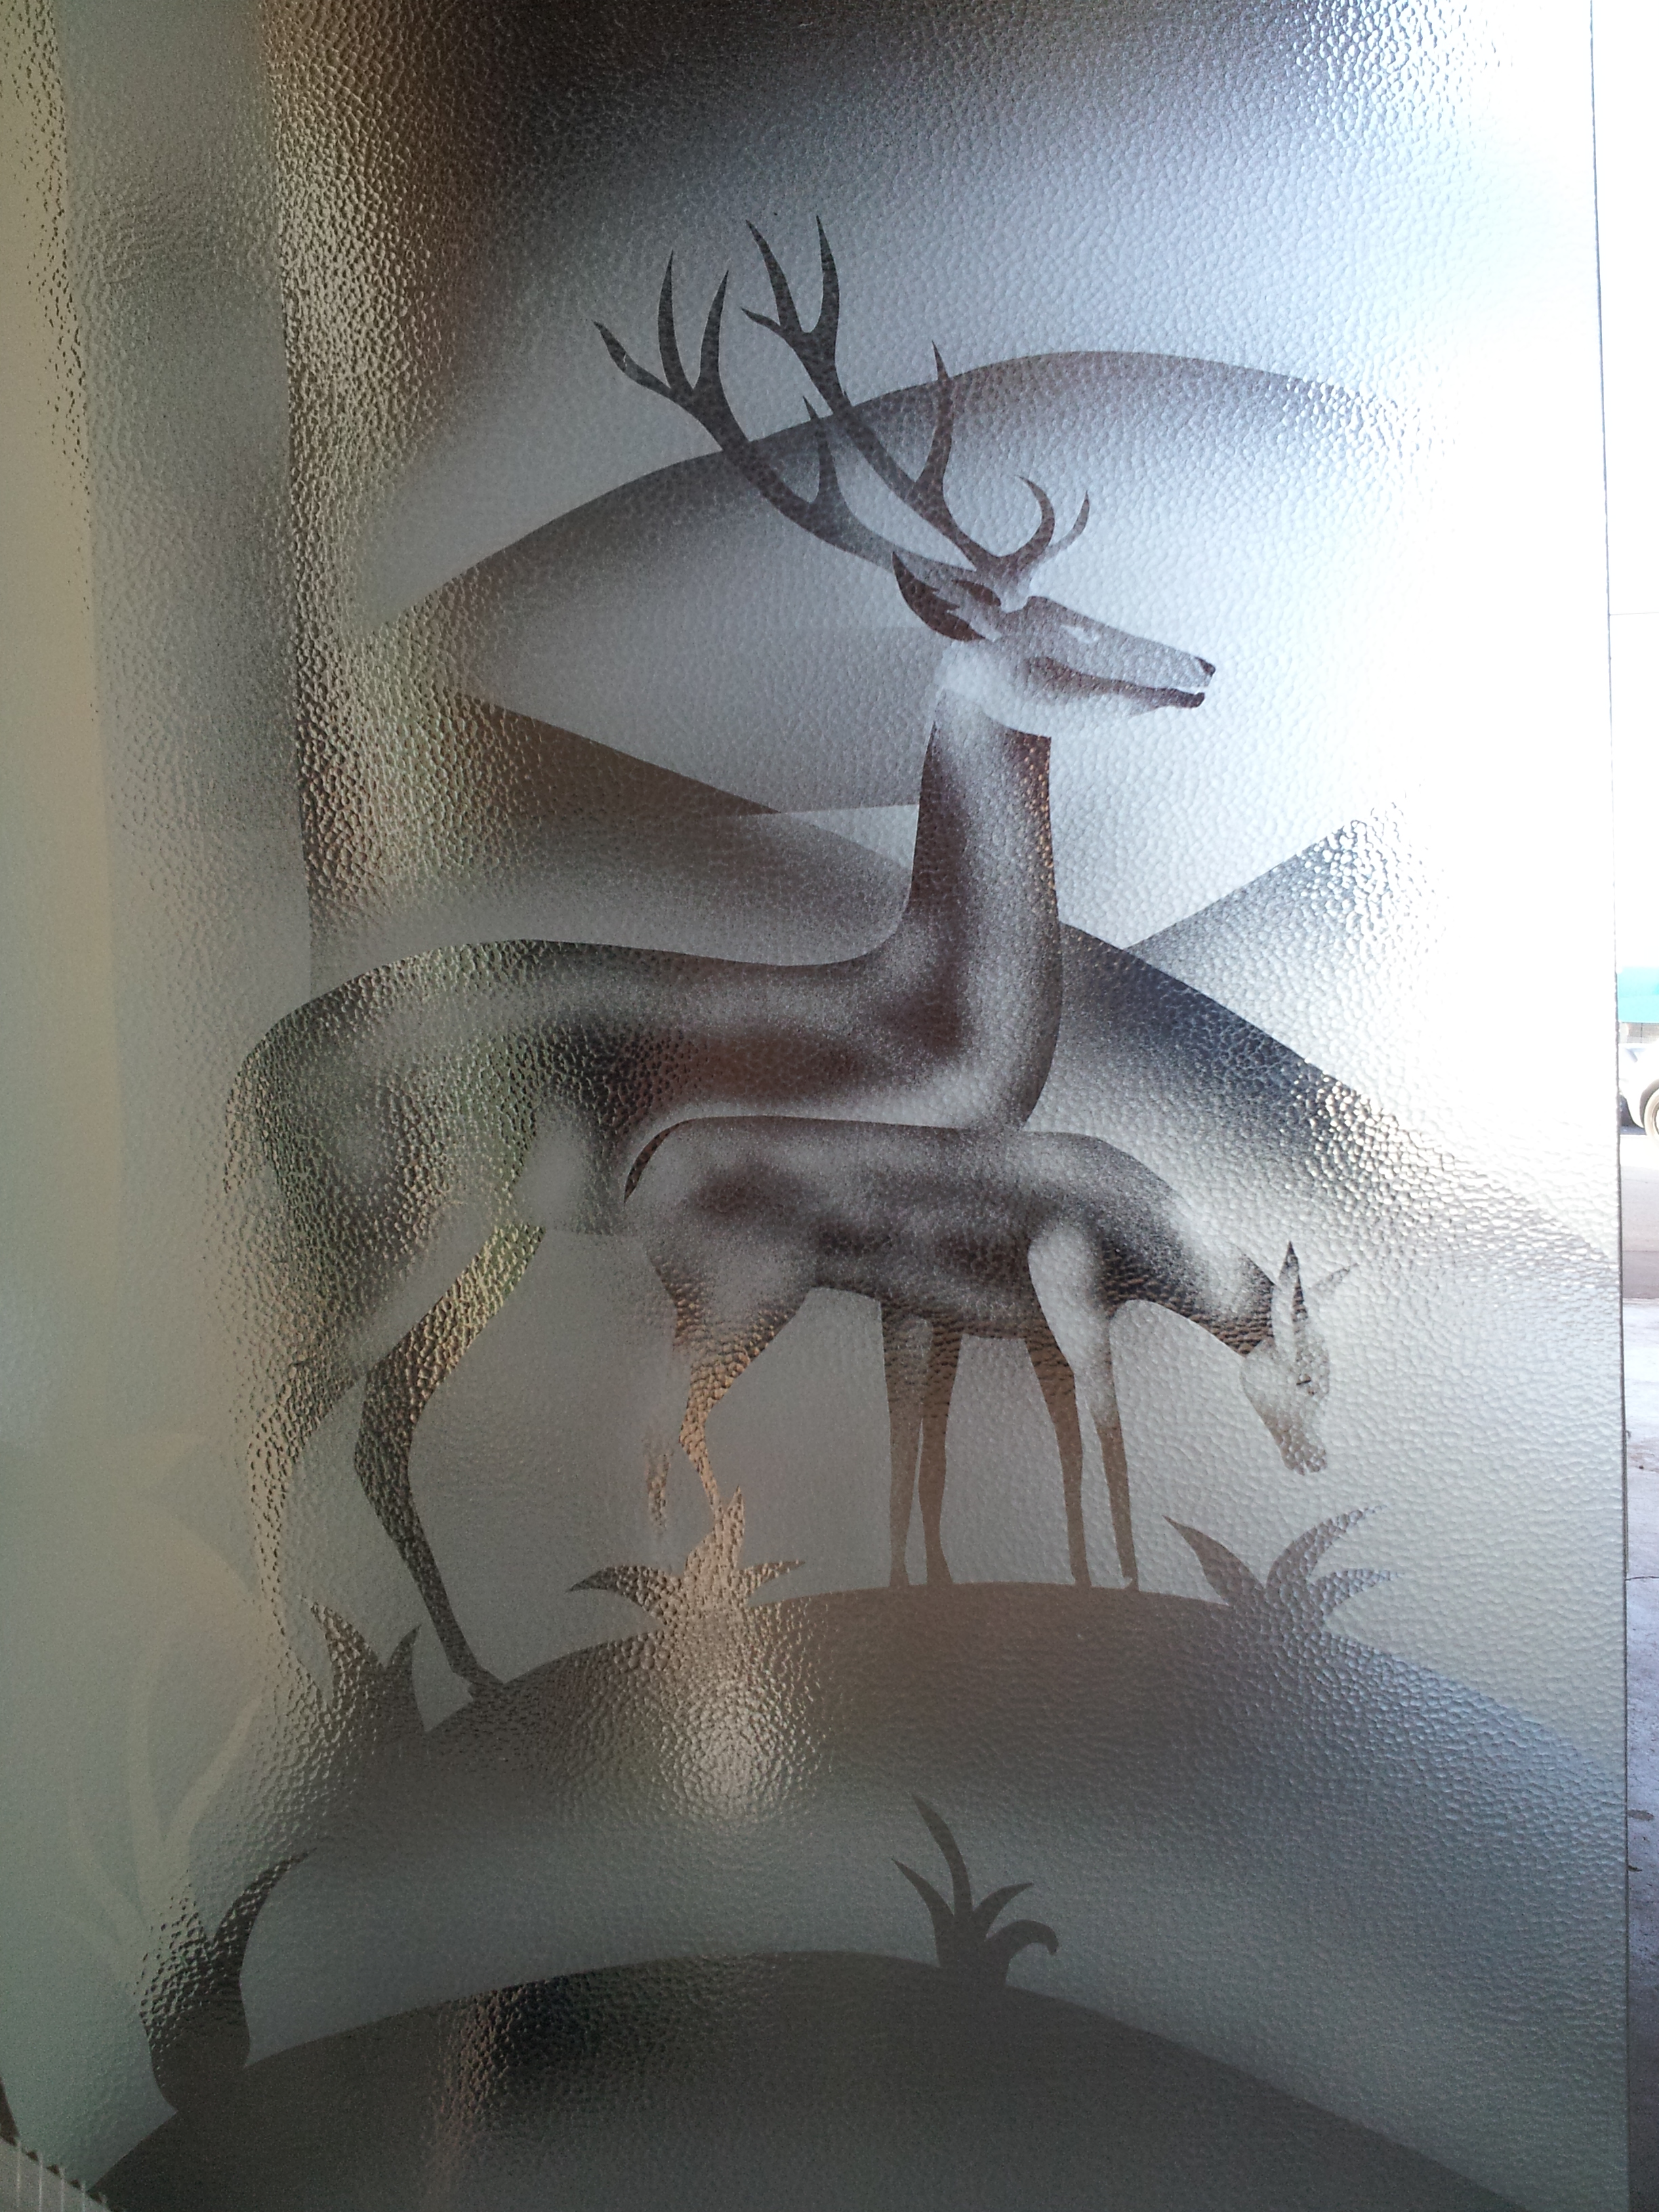 sandblasted glass Deer design - 1950's style